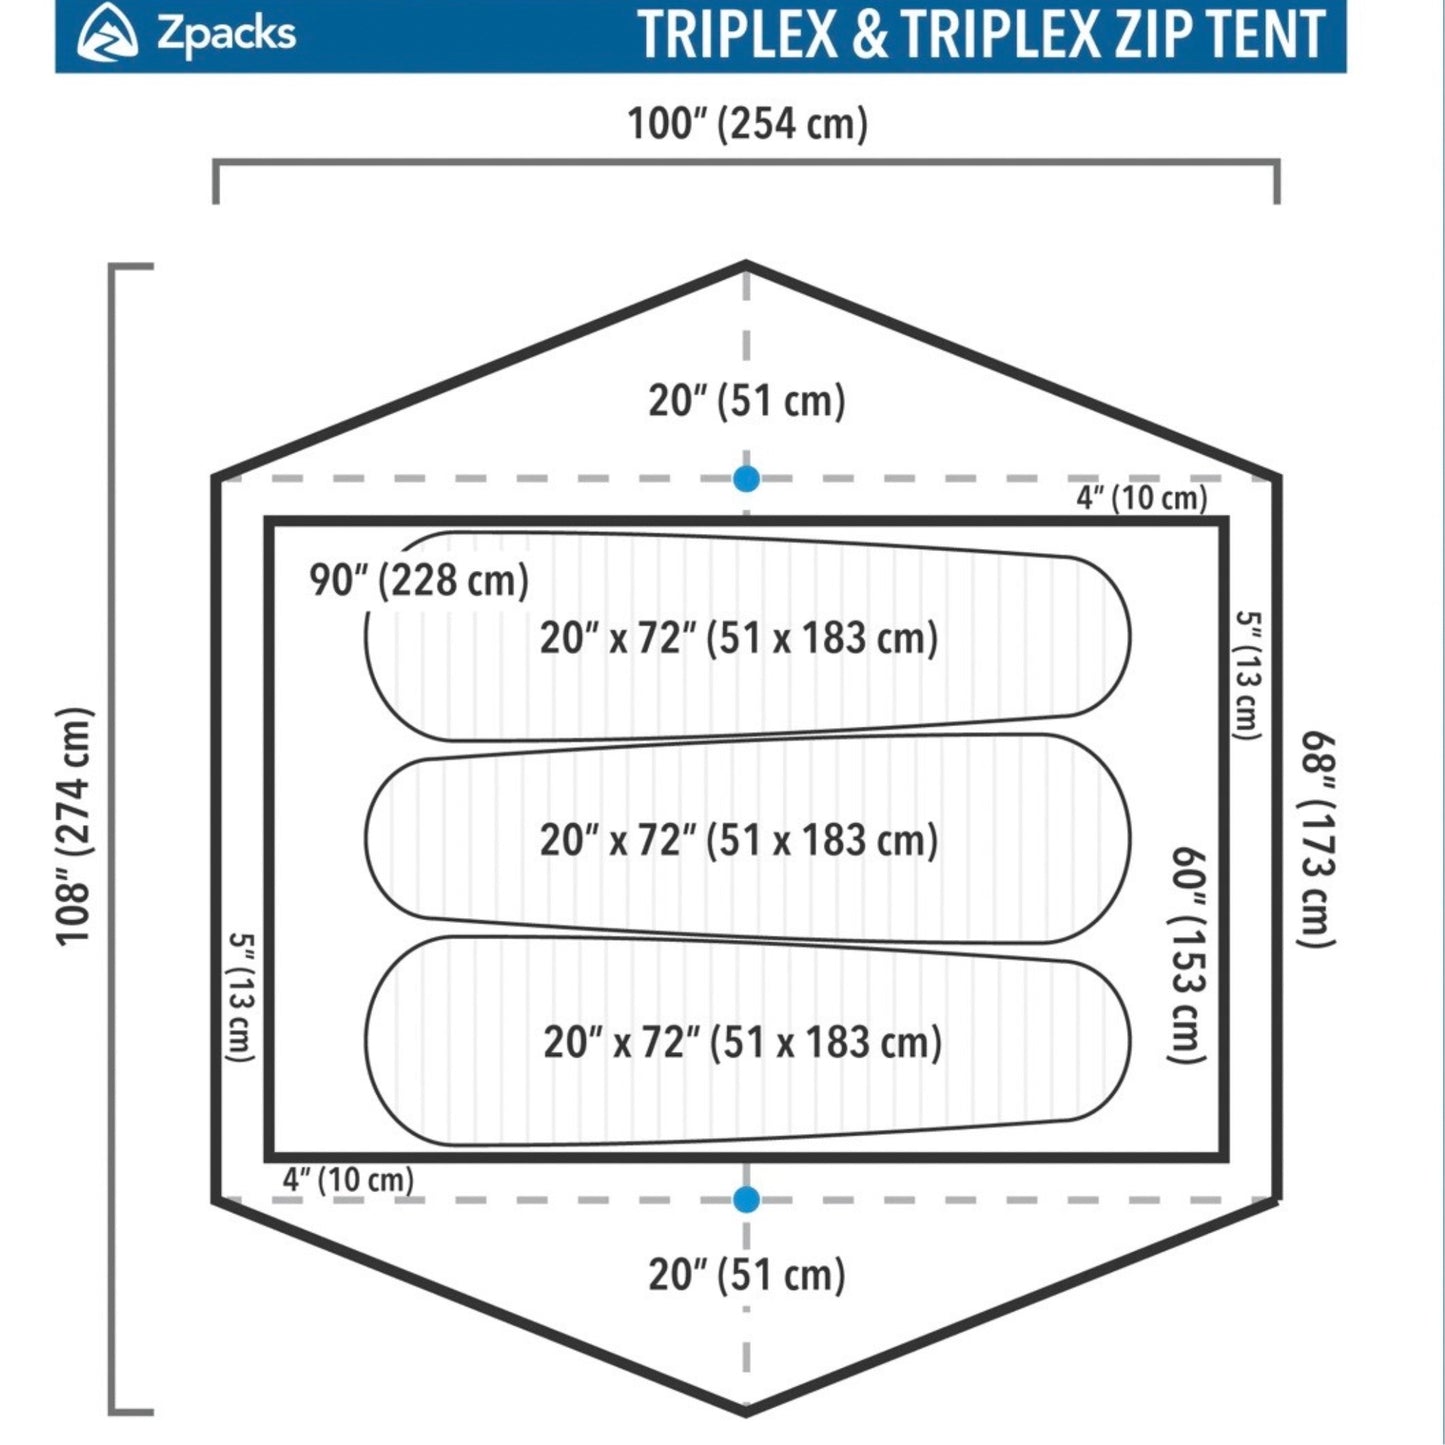 zpacks australia triplex tent measurements 